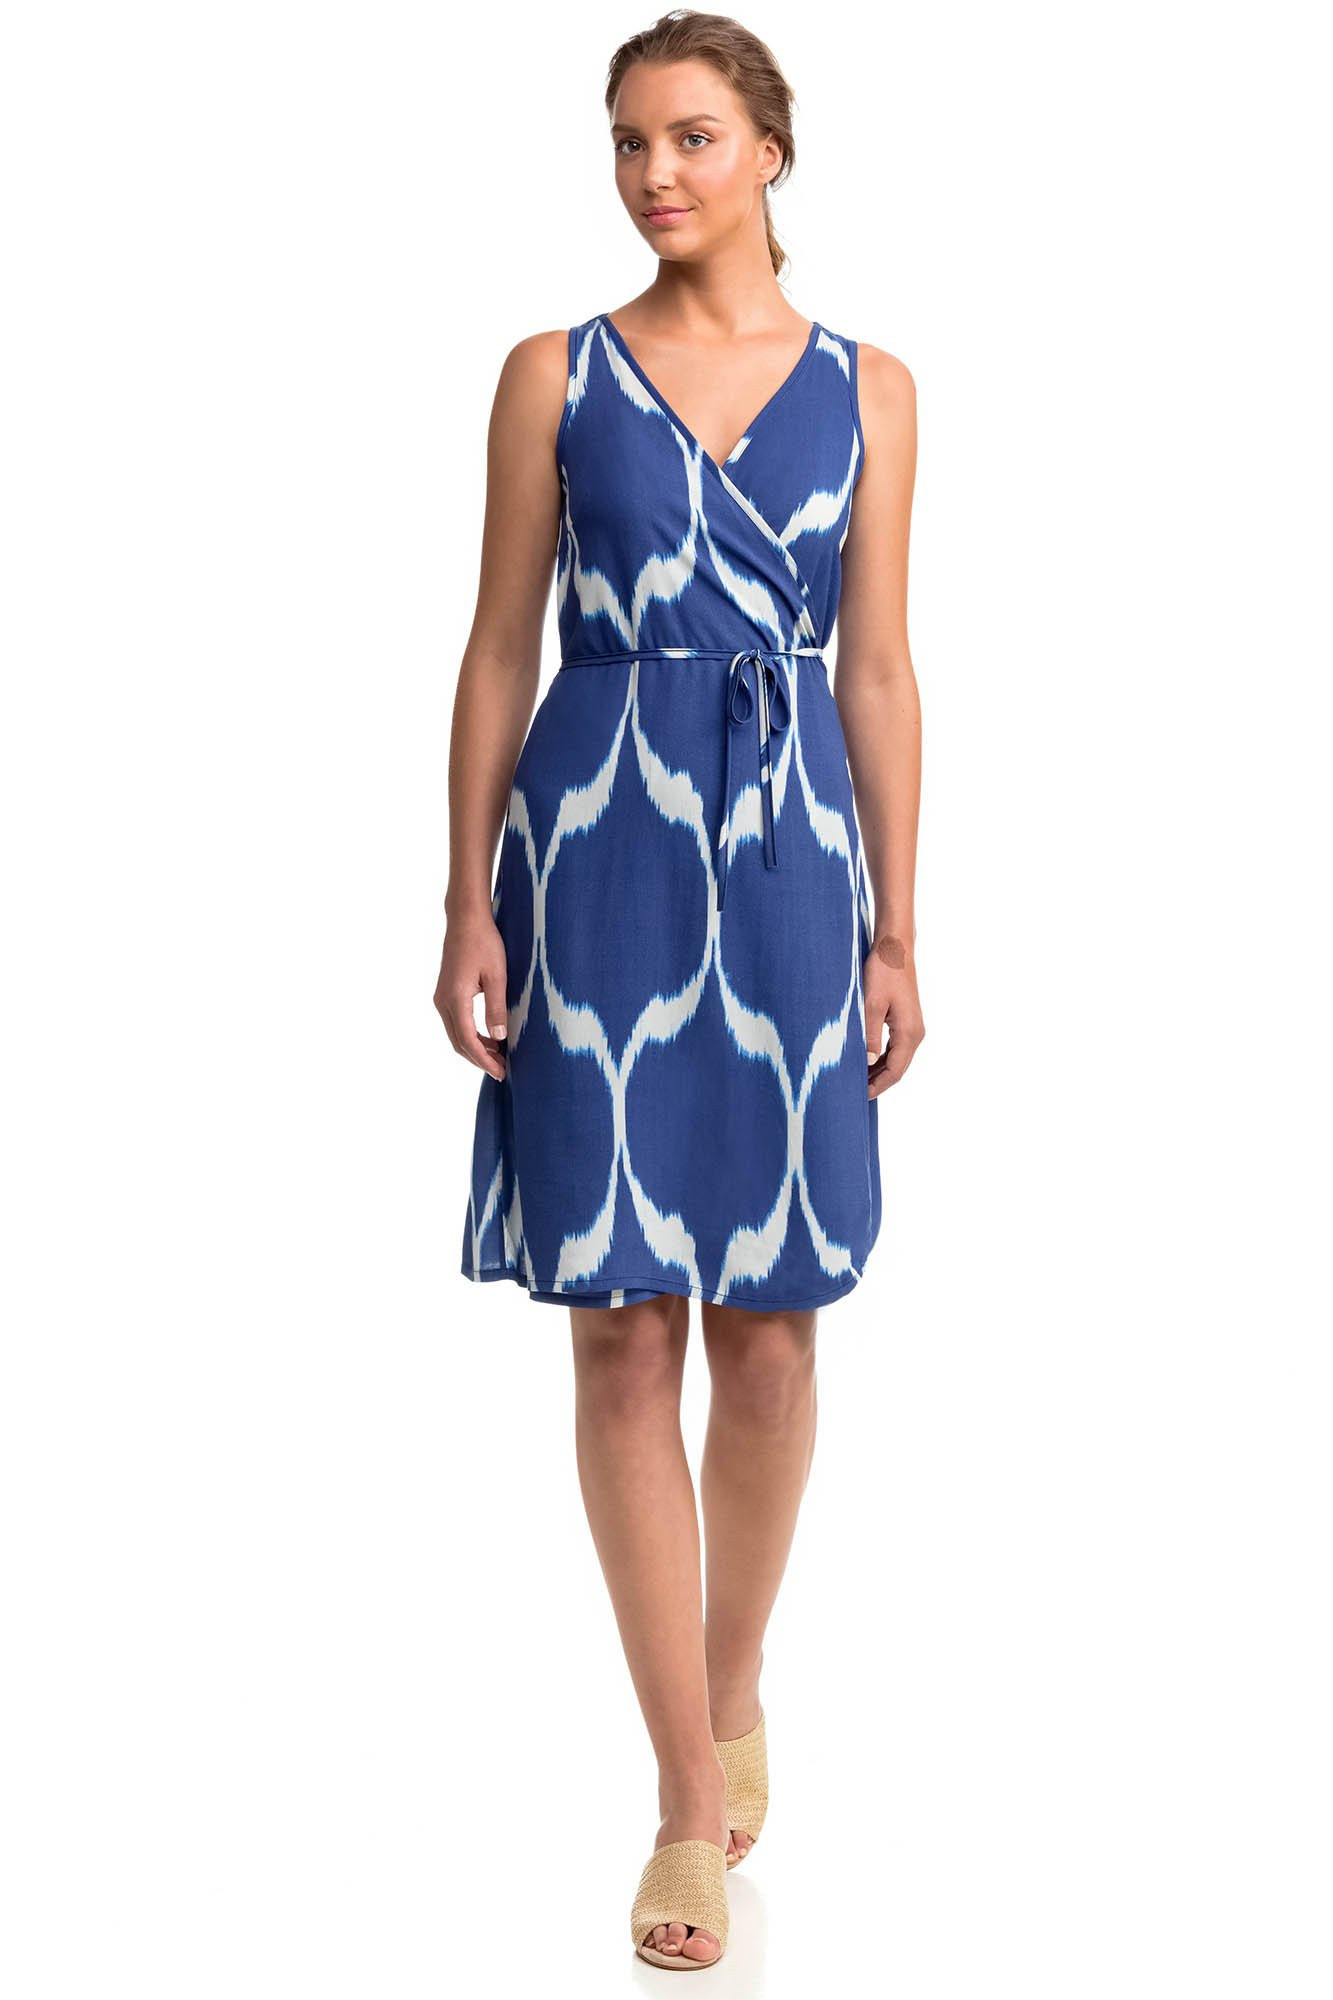 Dámké šaty 14485 - Vamp Velikost: L, Barvy: tmavě modrá - vzor